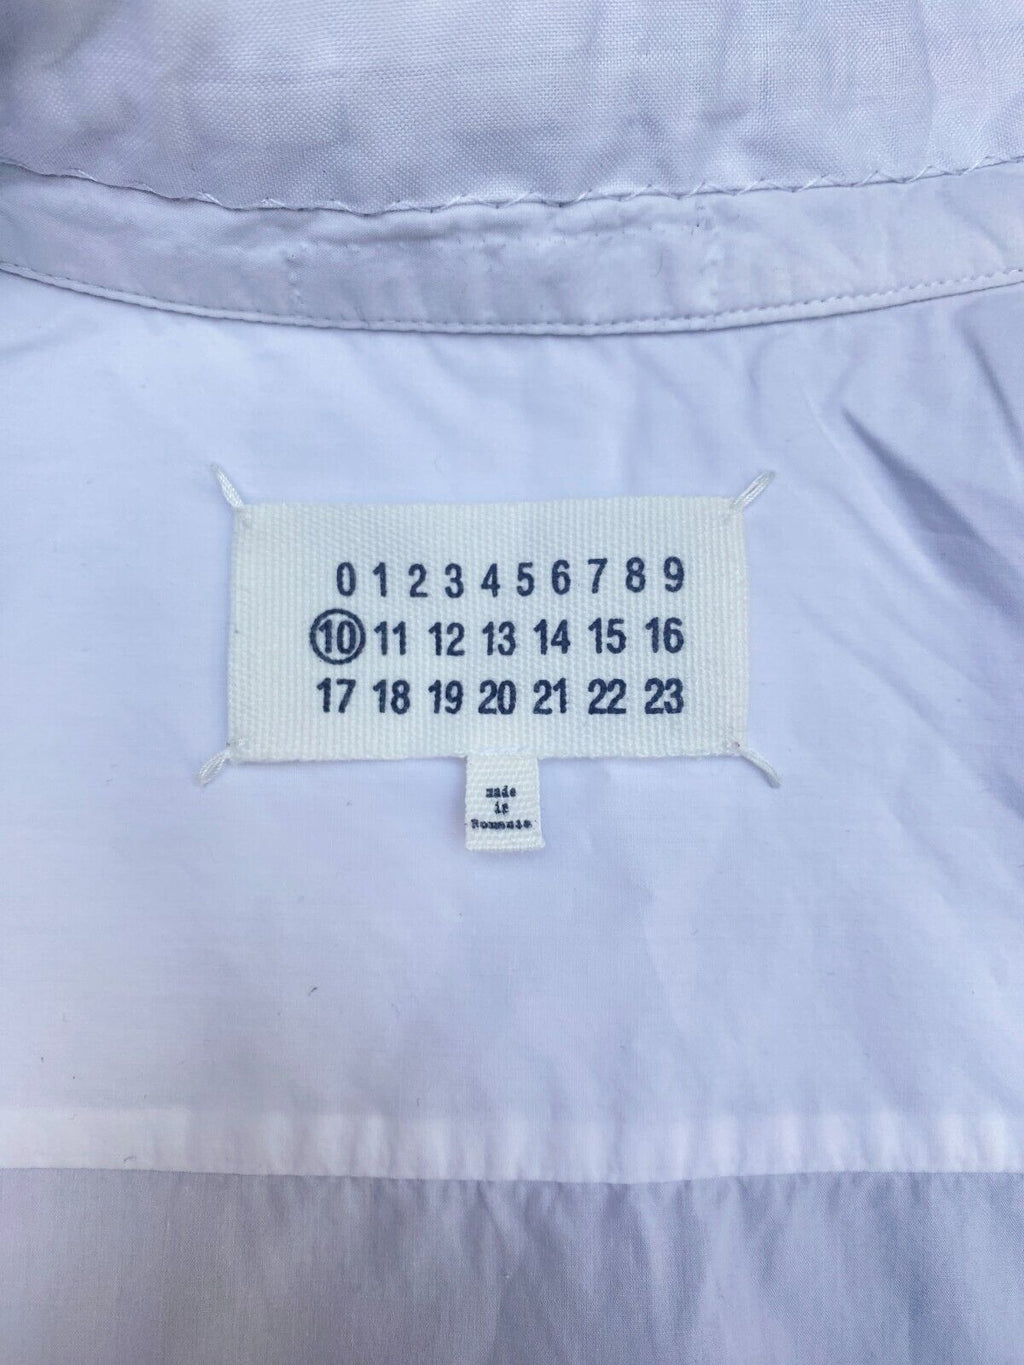 Perfect White Shirt  4 stitches on back